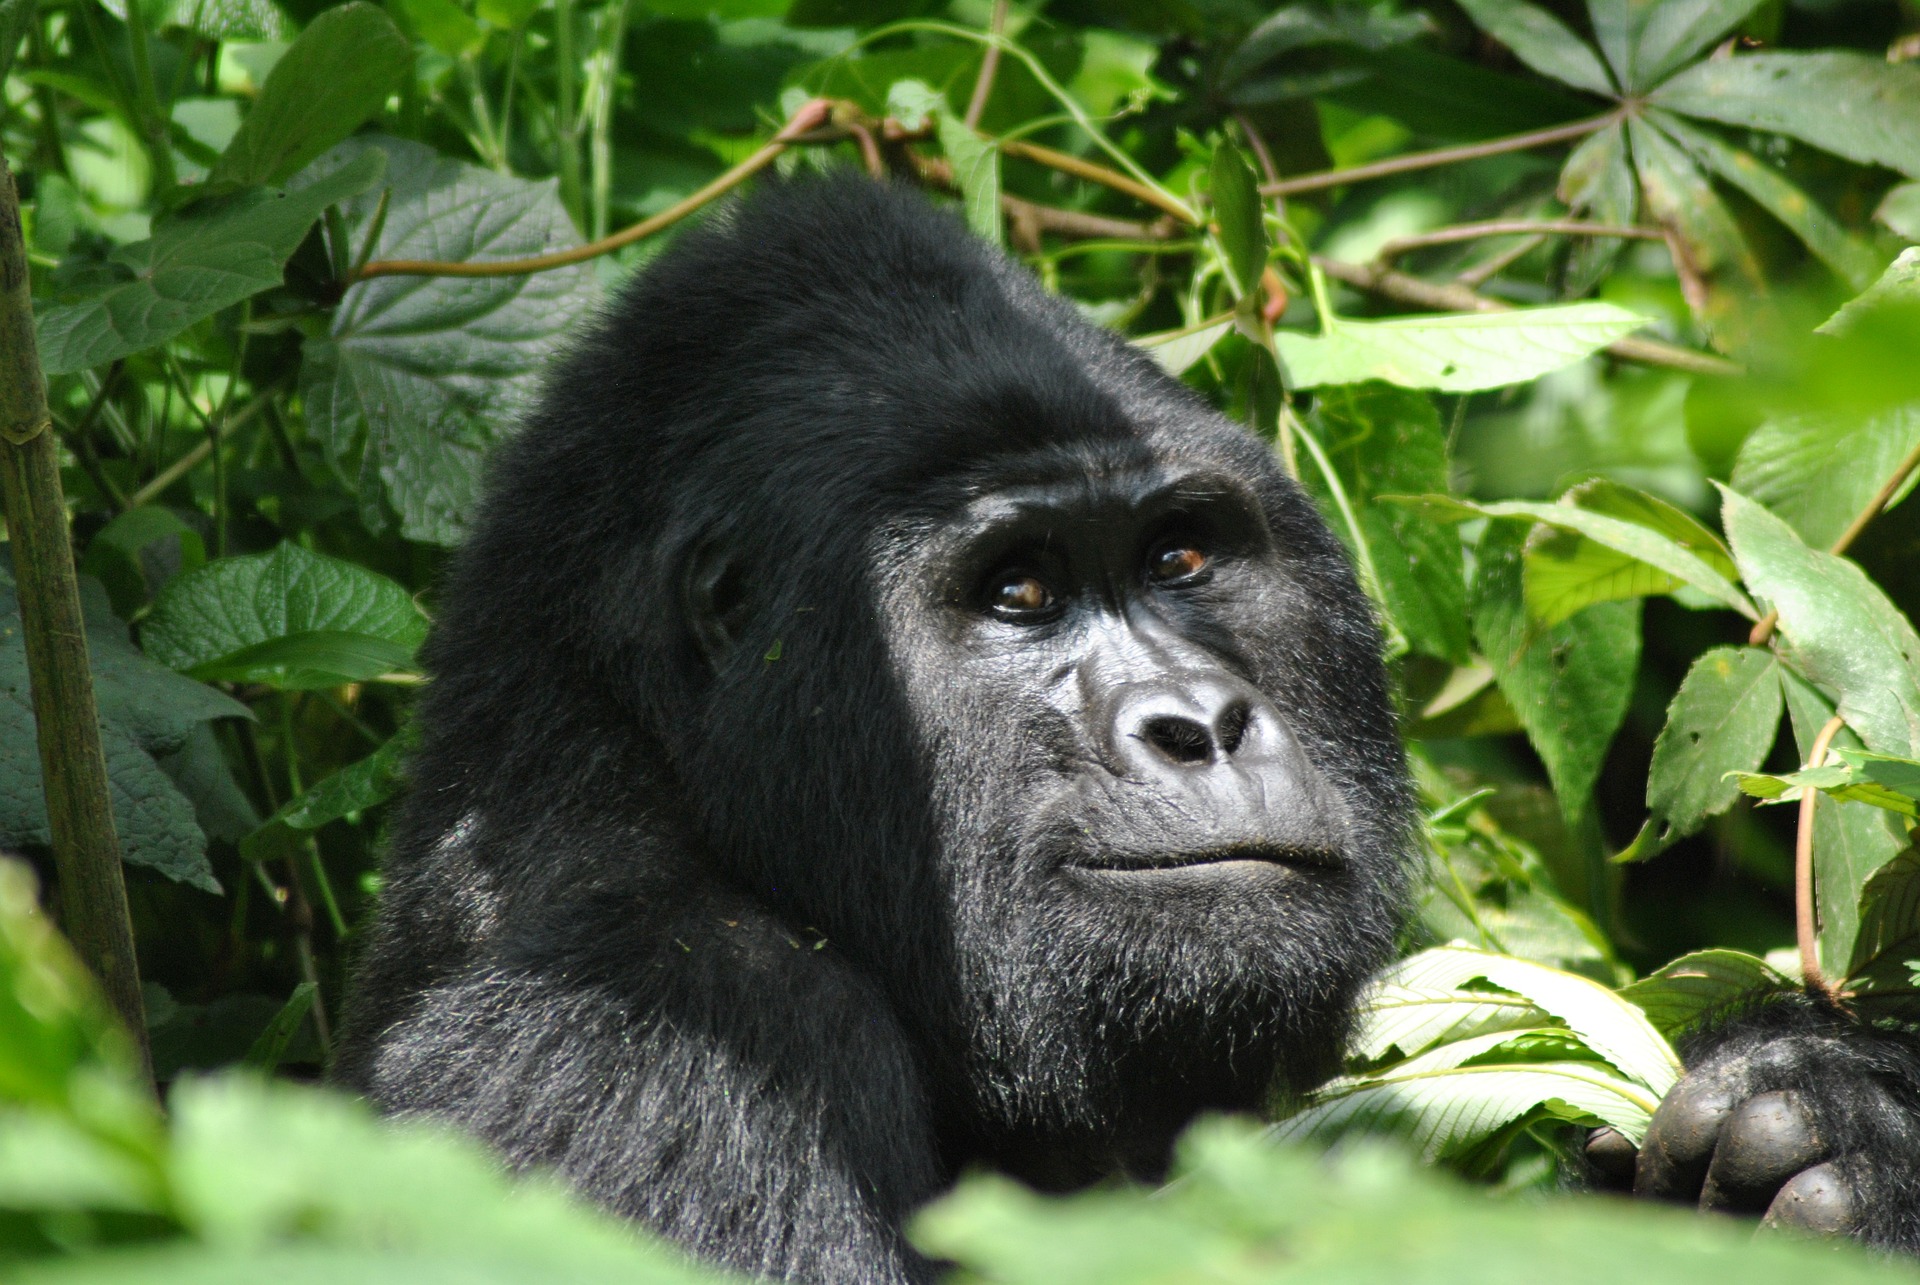 Things to consider when booking a solo gorilla trekking safari in Uganda